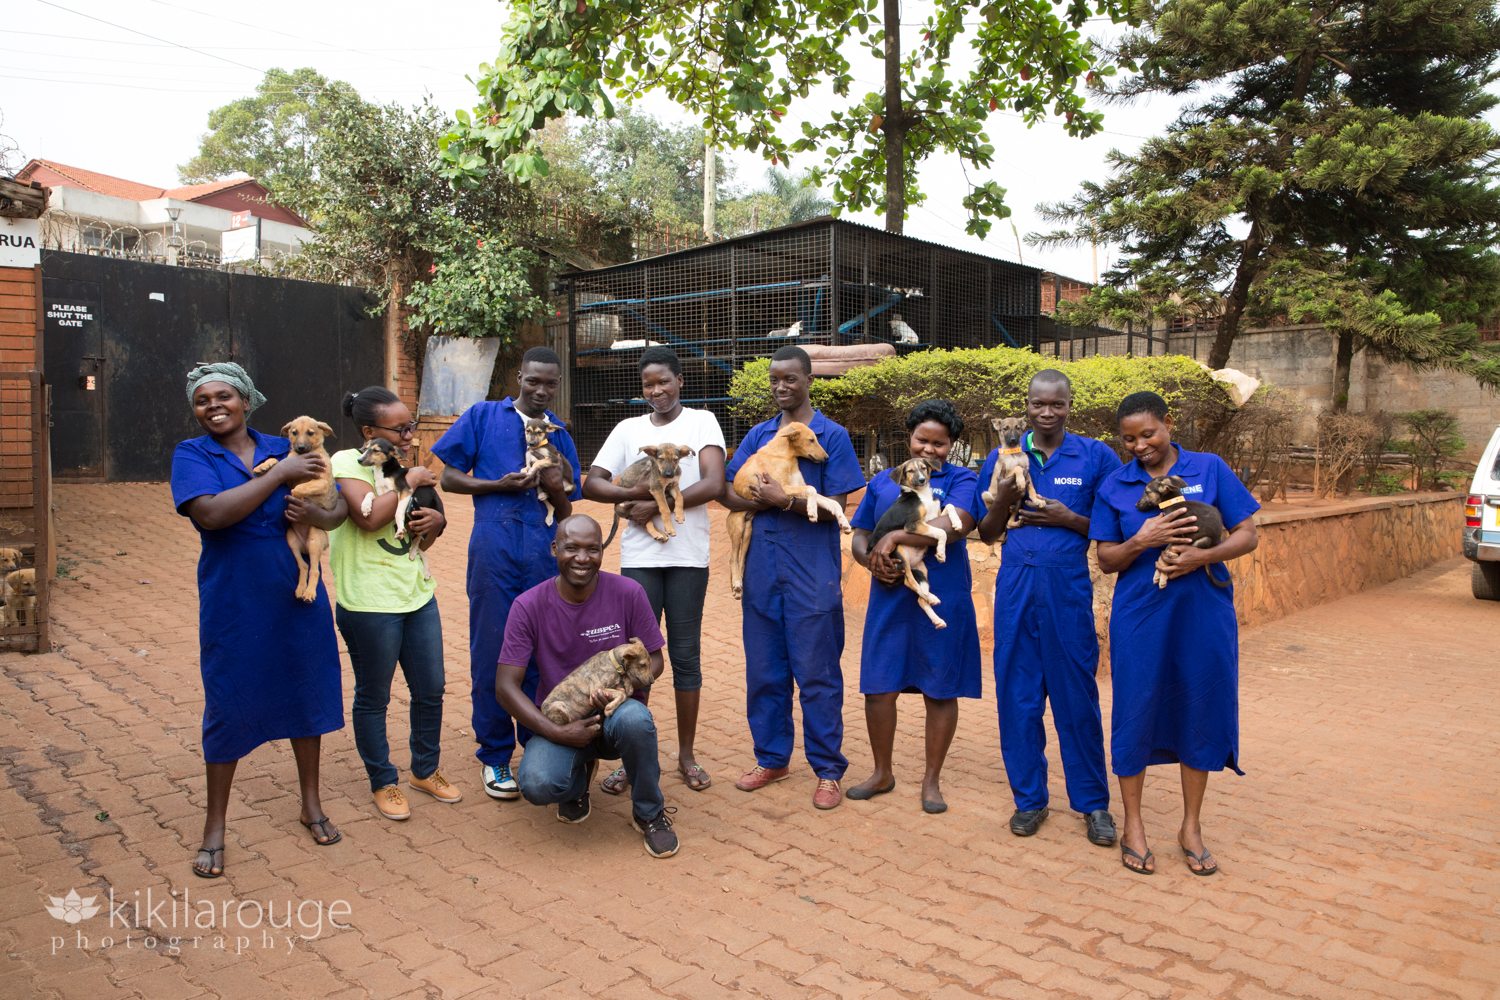 Group portrait of the team at USPCA Uganda